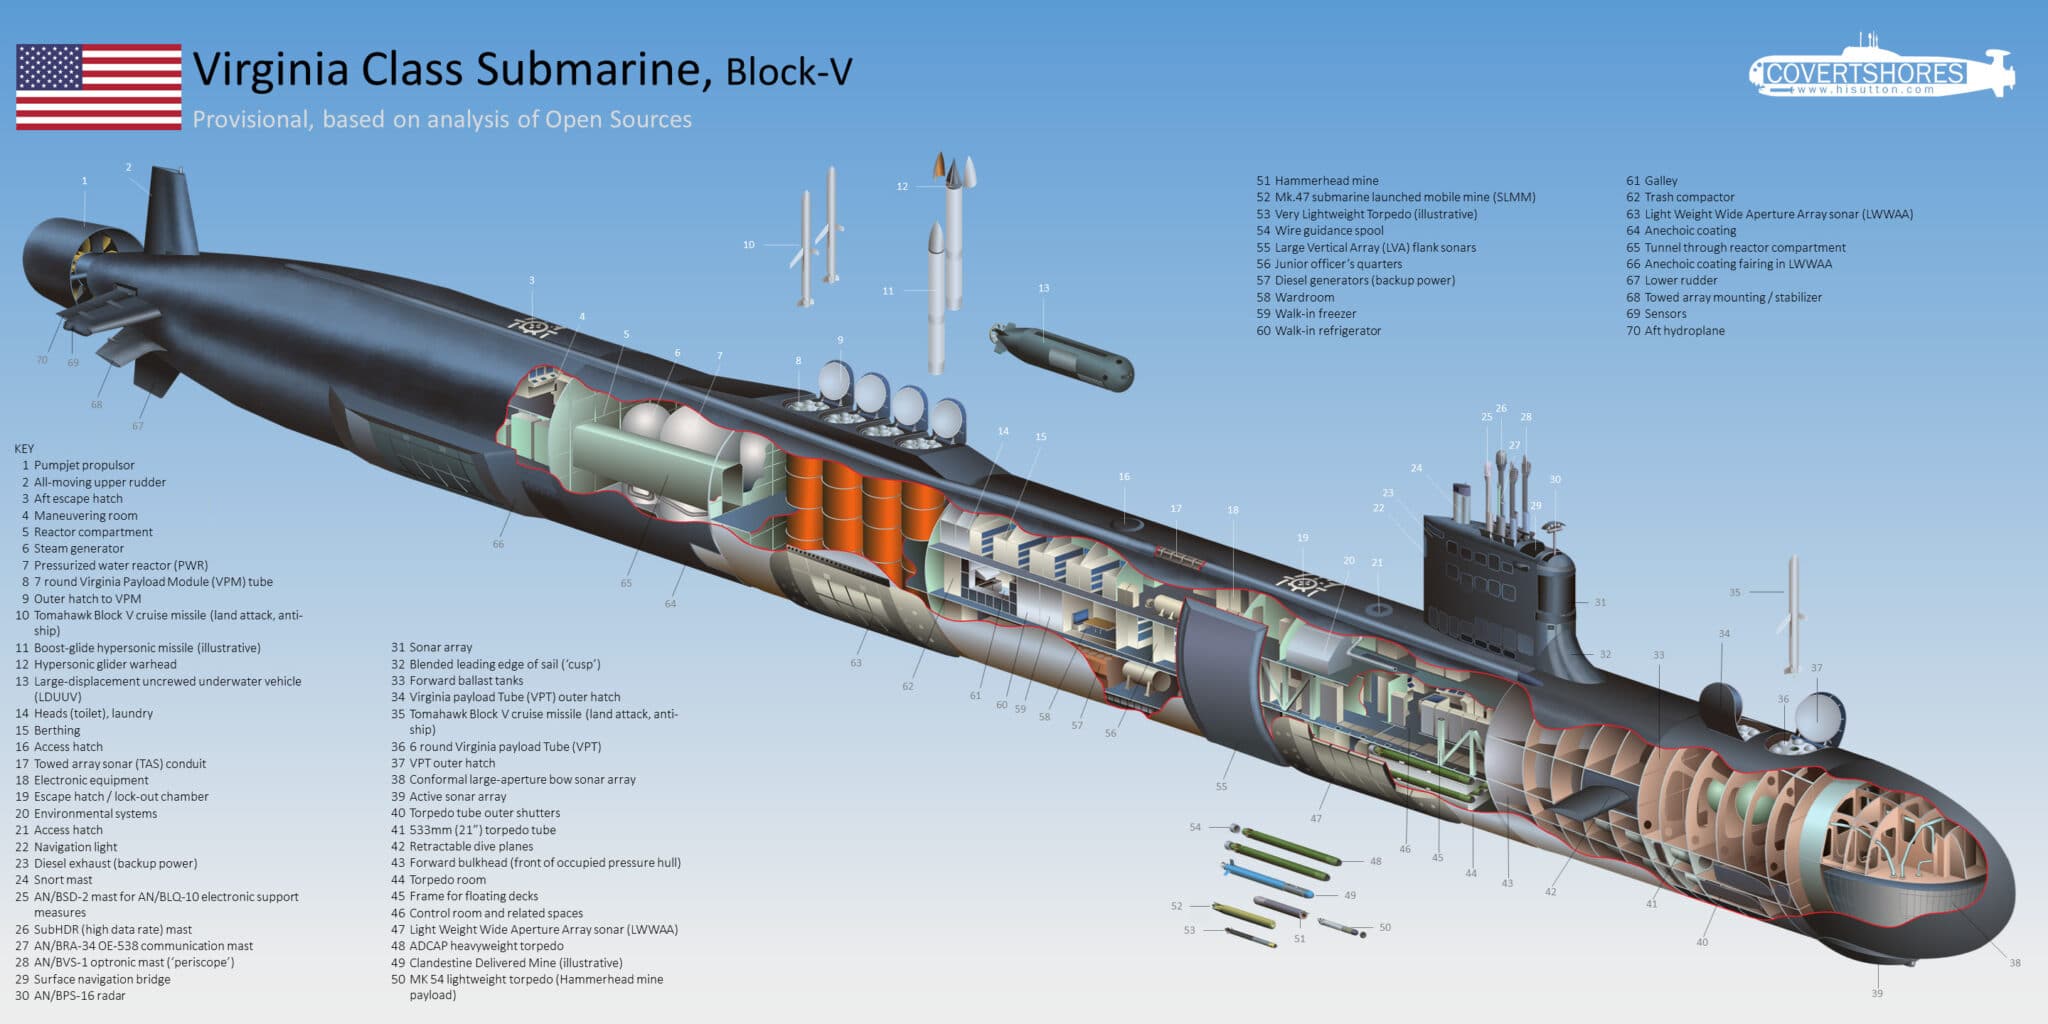 U.S. Navy's Virginia Class Submarines To Get 76% More Firepower - Naval News